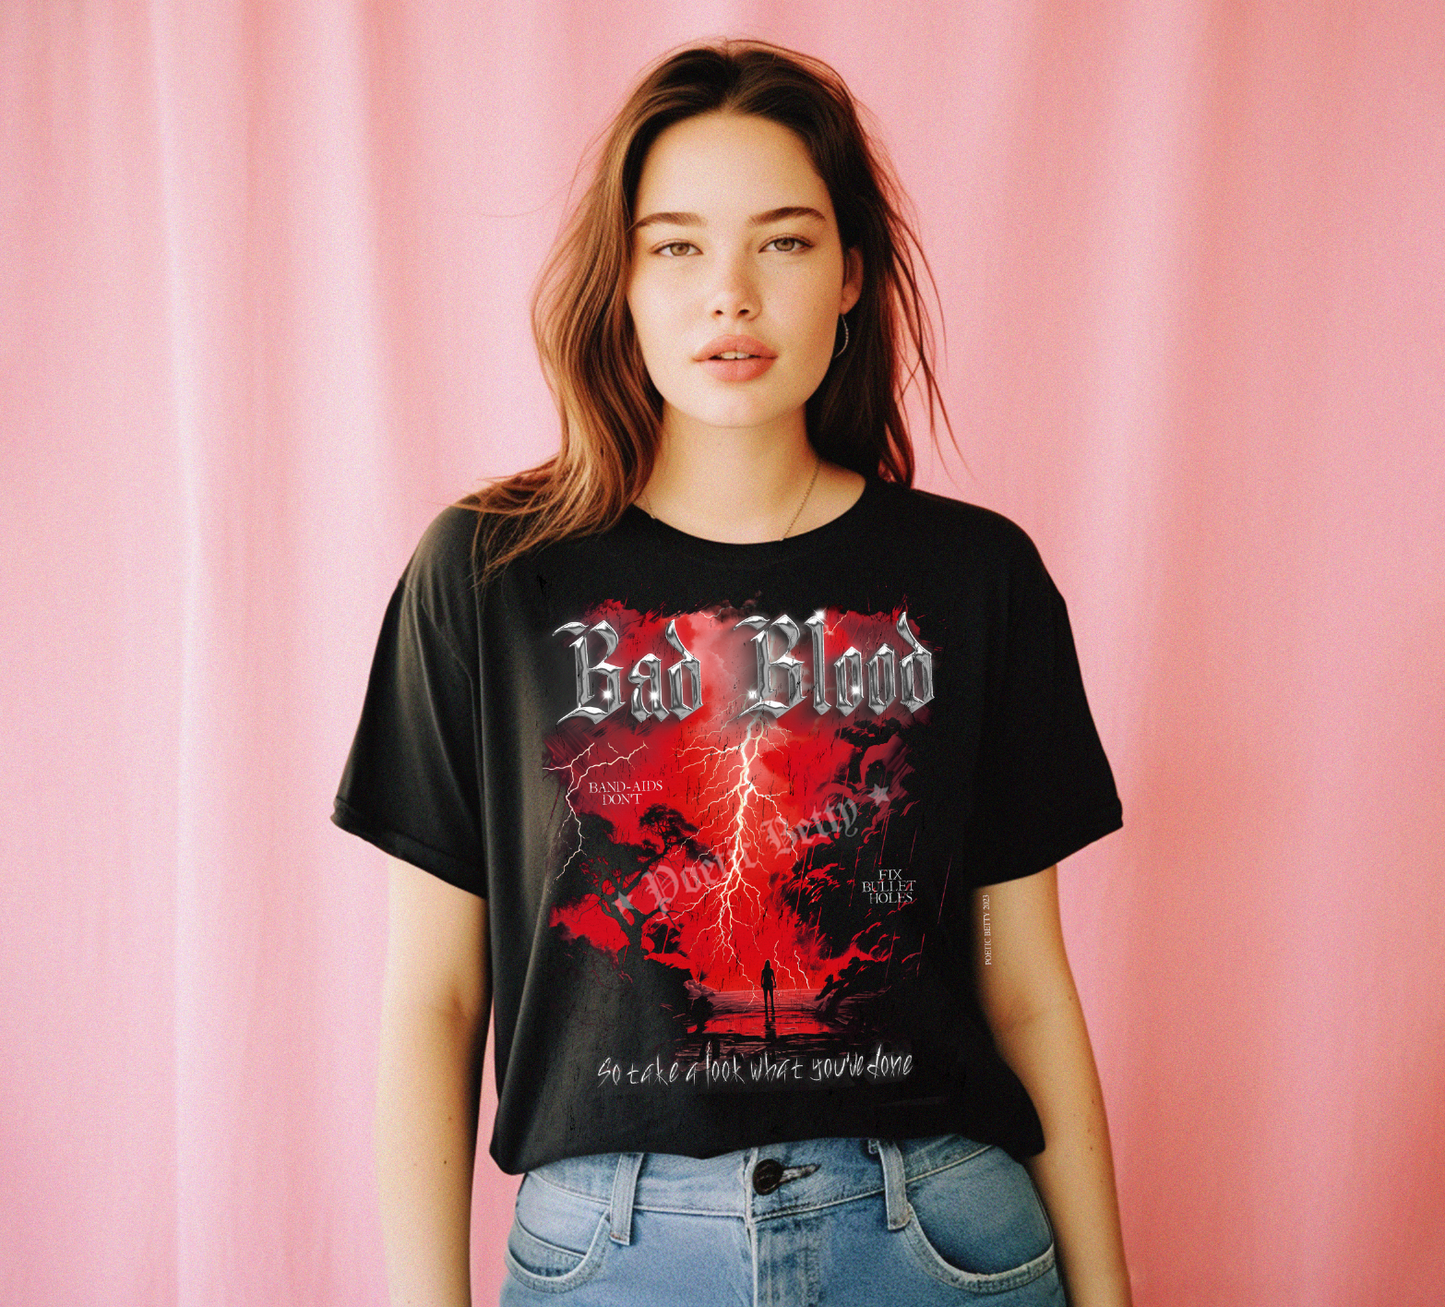 Bad Blood 1989 Taylor's Version Inspired Vintage Band Unisex T-Shirt